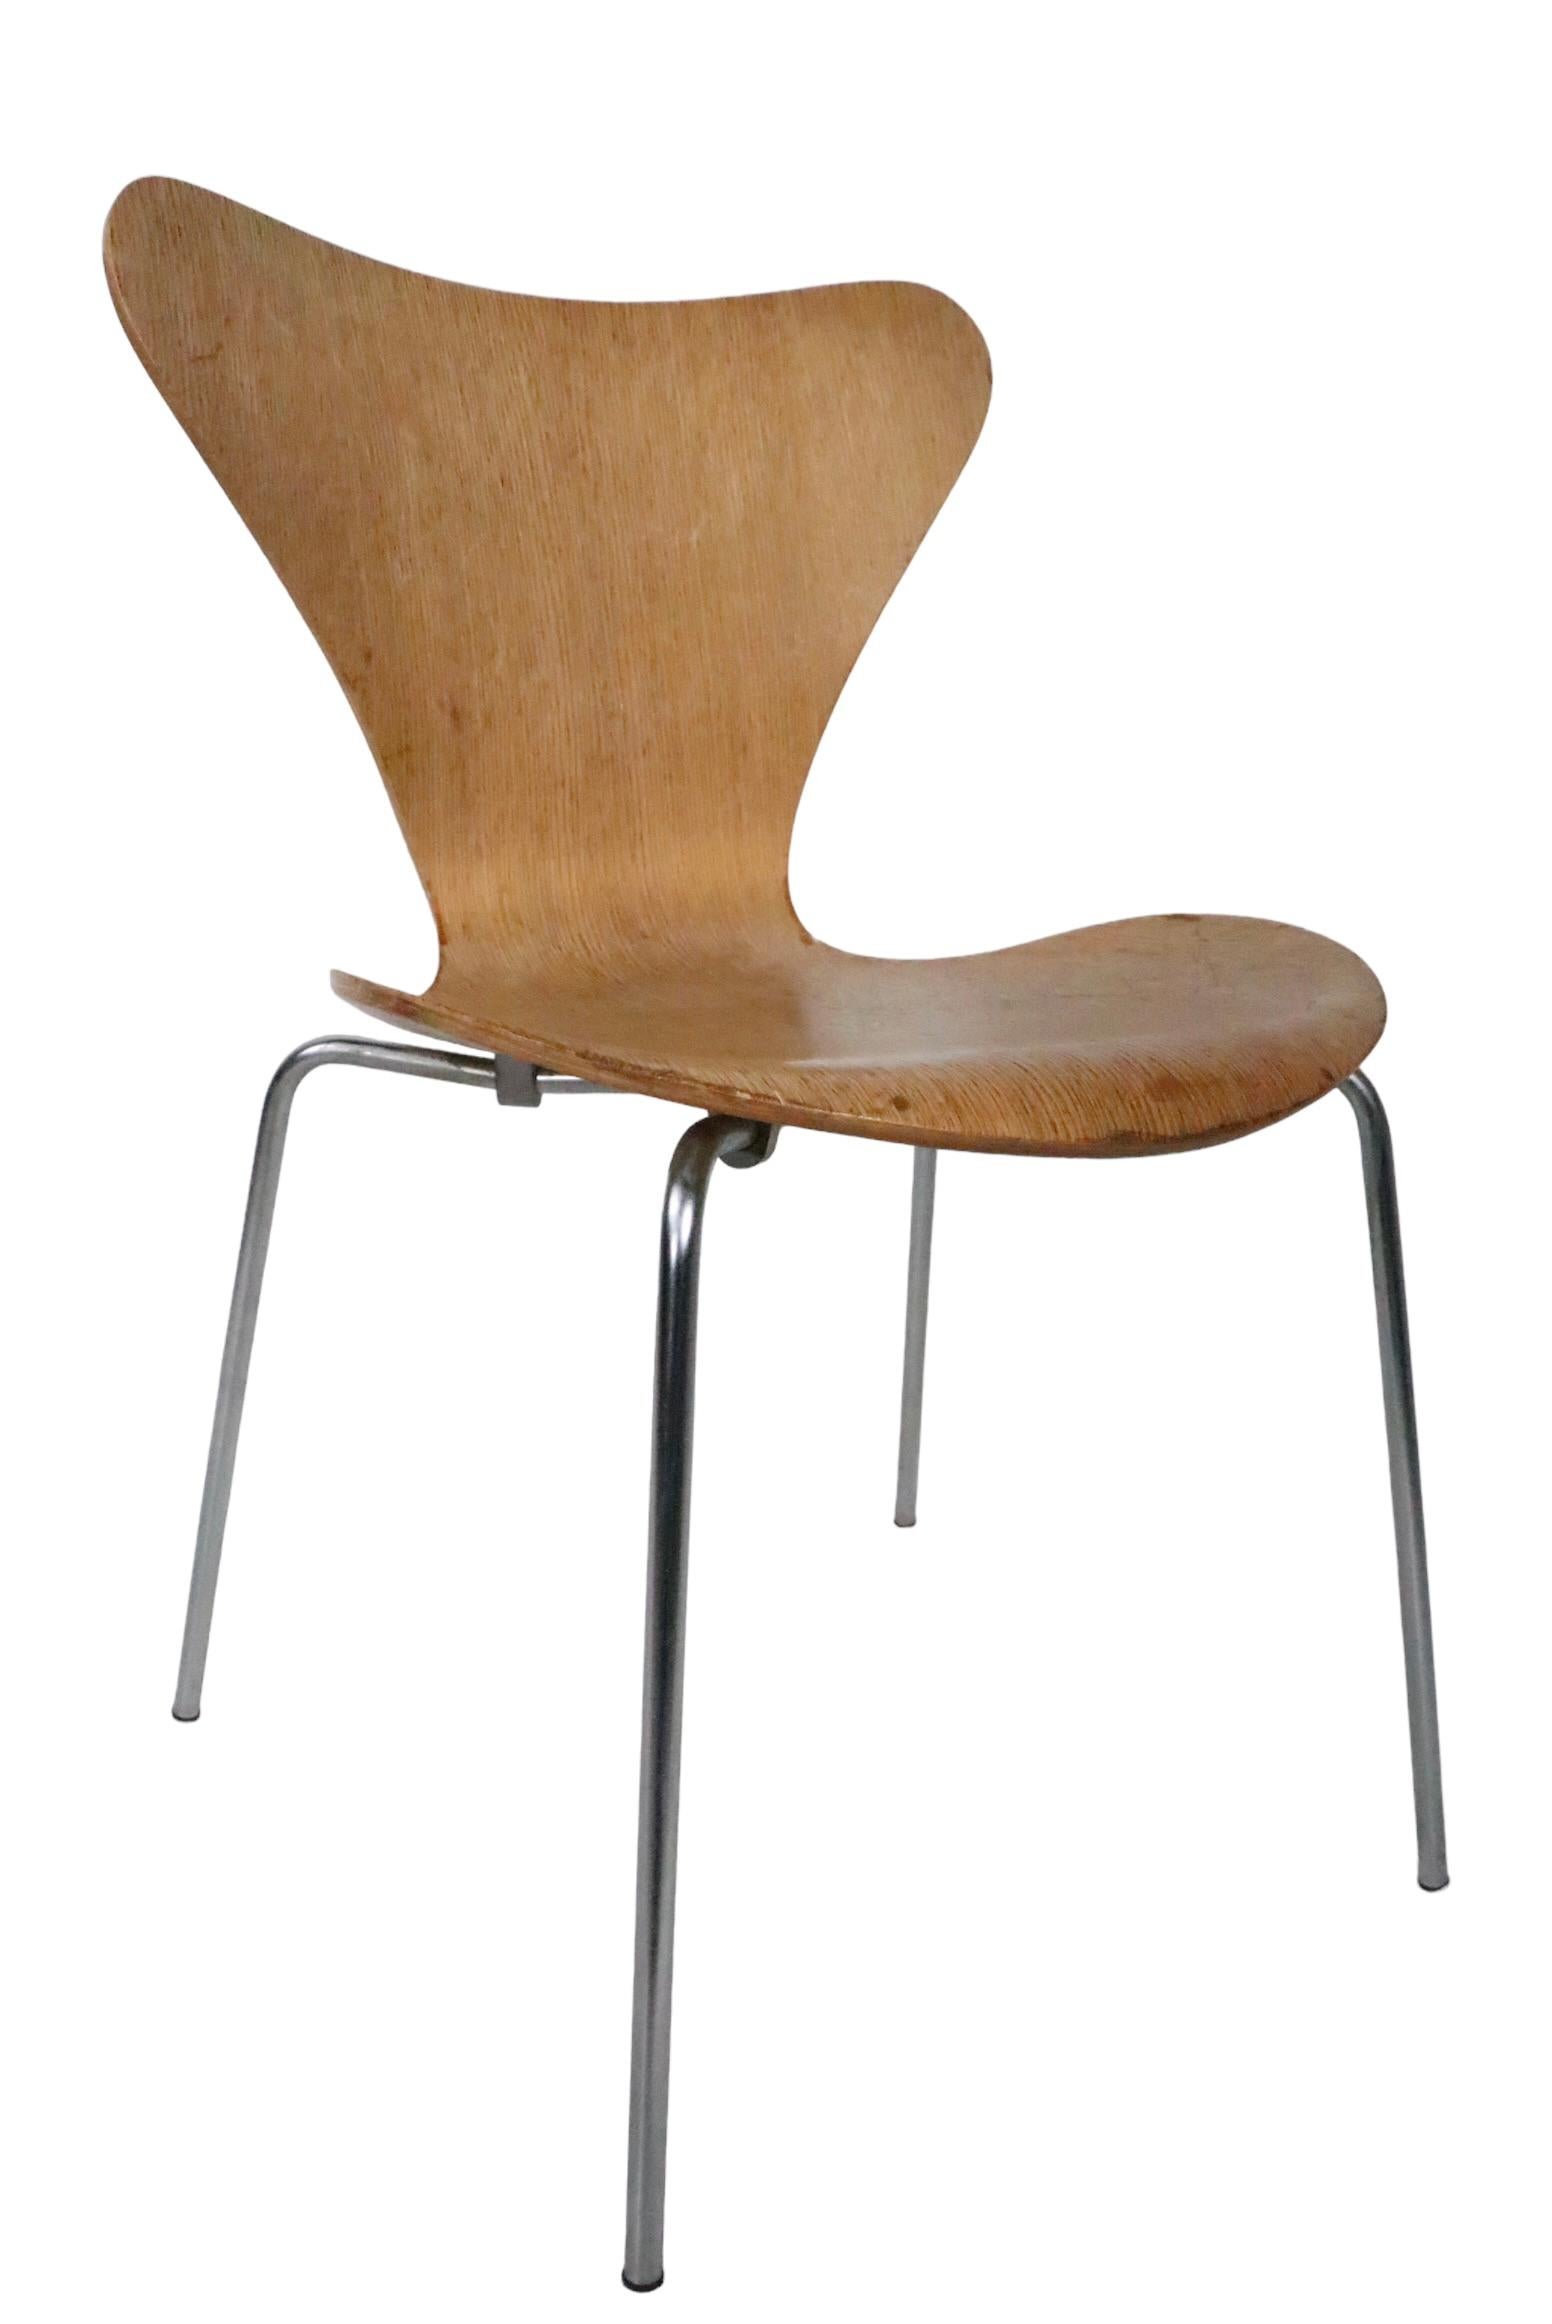 Danish Arne Jacobsen Fritz Hansen Series 7 Butterfly Chair in Oak Veneer, circa 1960s For Sale